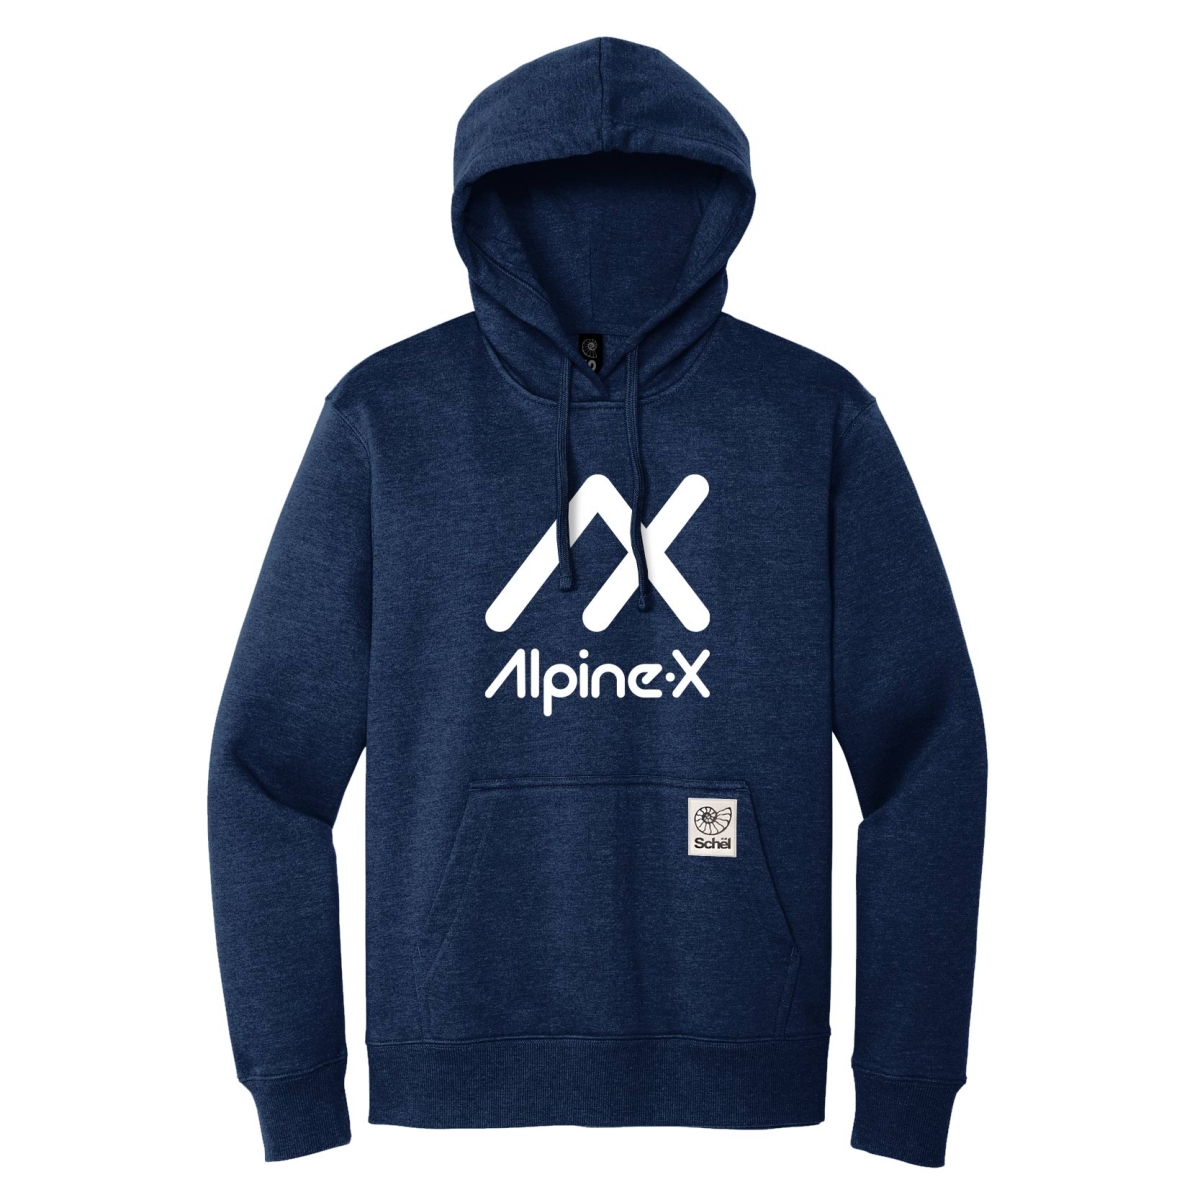 Schel Apex hoodie with Alpine-X logo